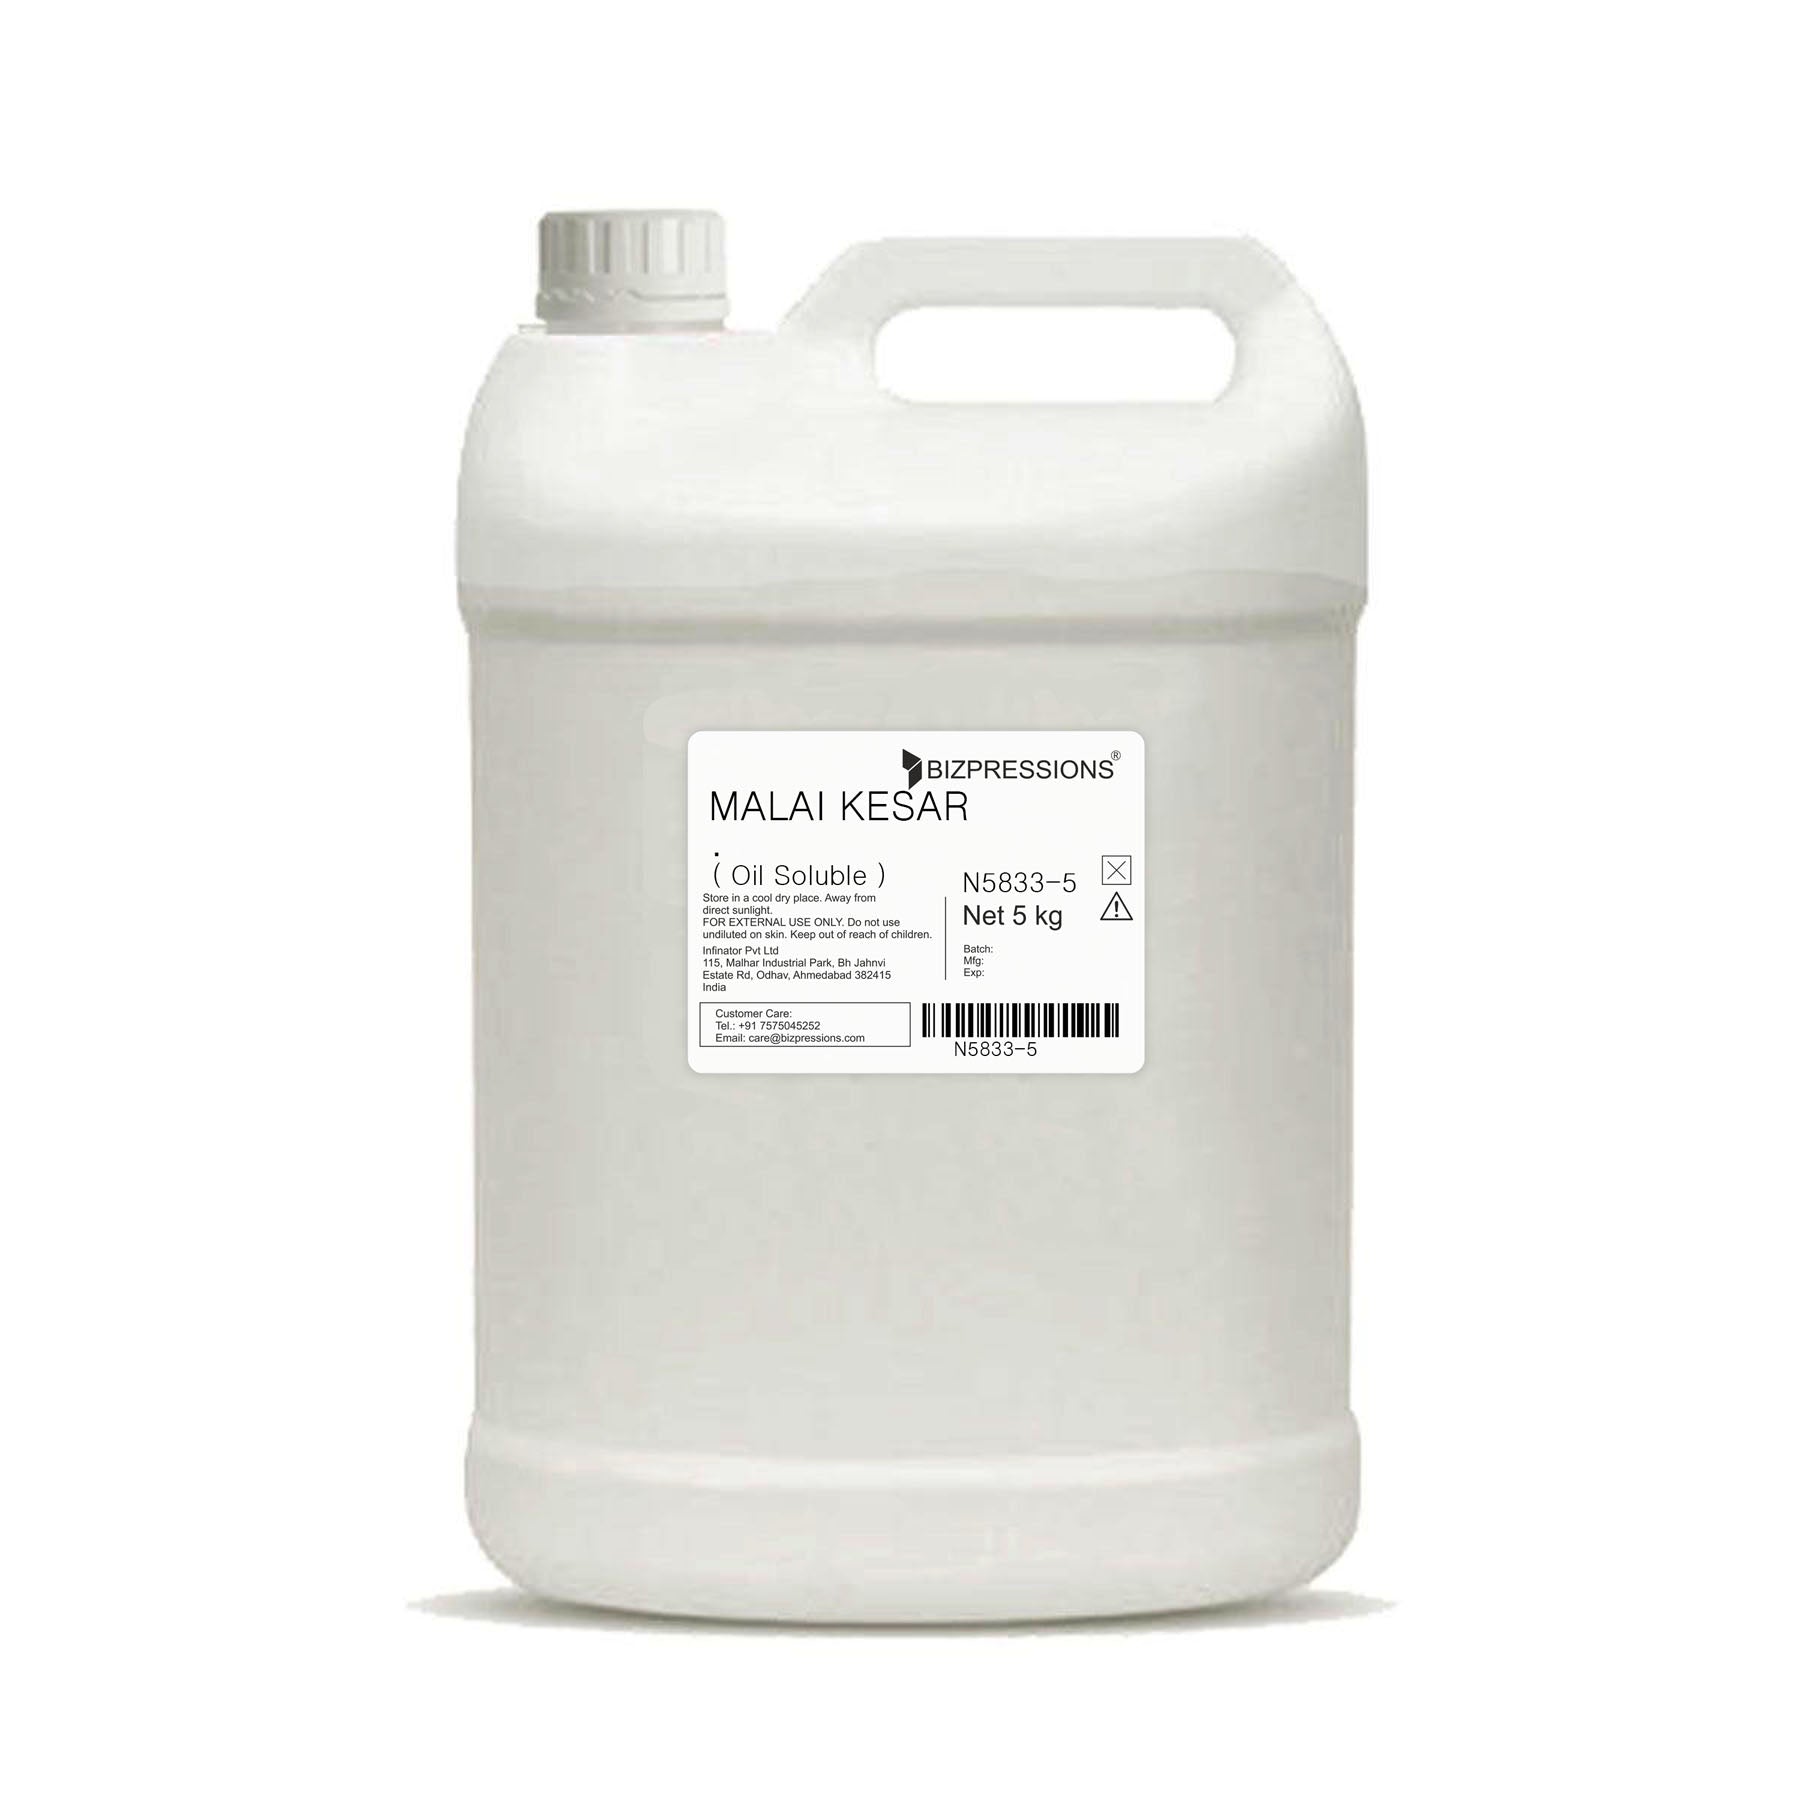 MALAI KESAR - Fragrance ( Oil Soluble ) - 5 kg